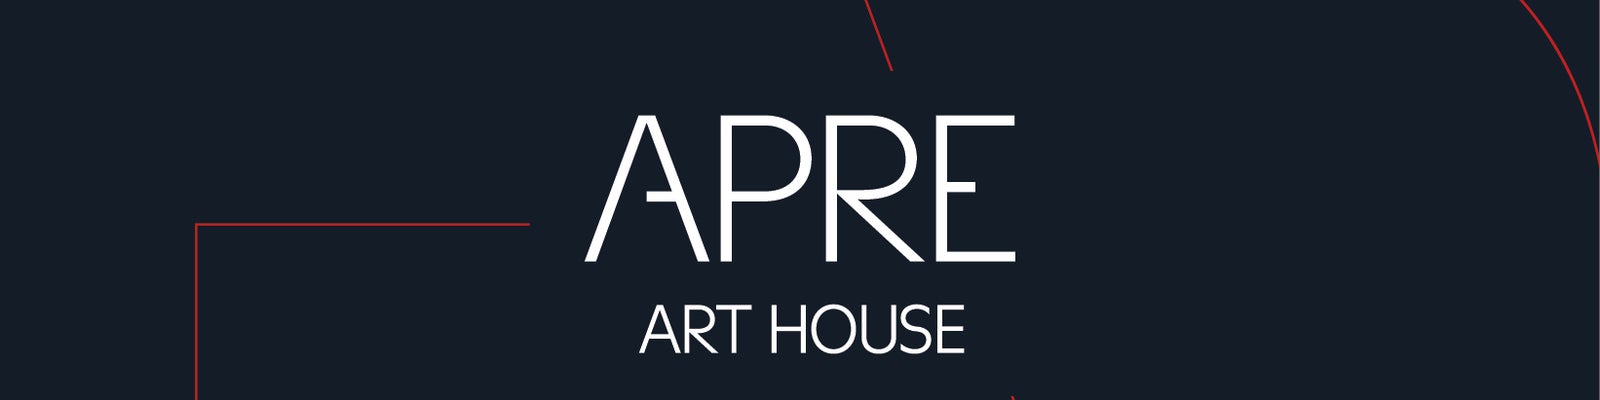 APRE Art House